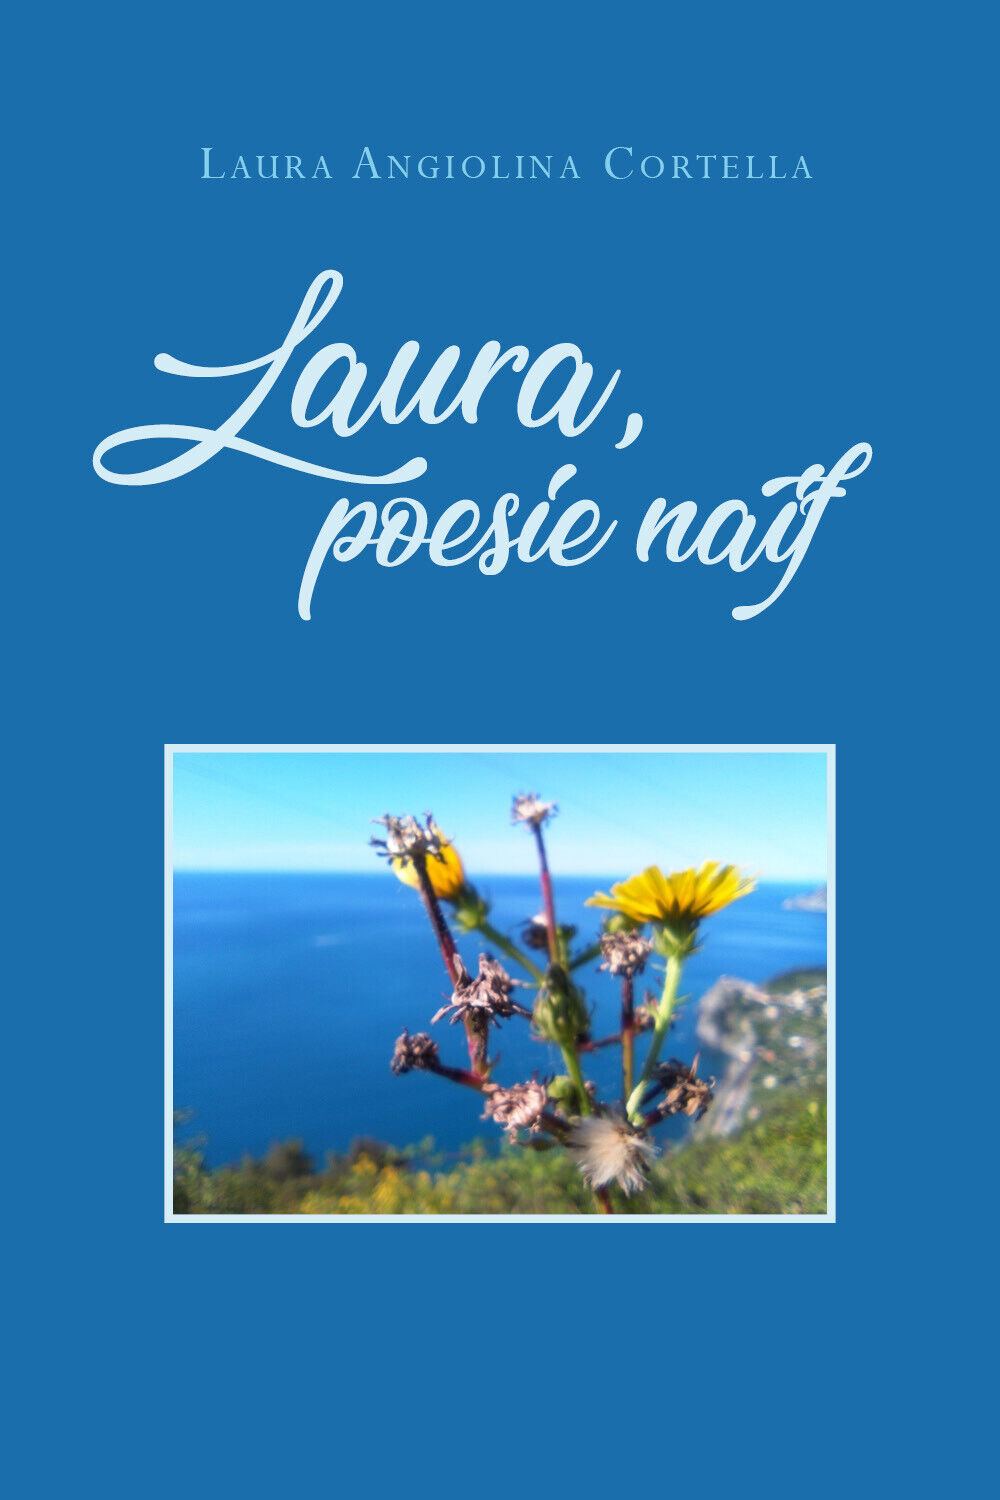 Laura, poesie naif di Laura Angiolina Cortella,  2021,  Youcanprint